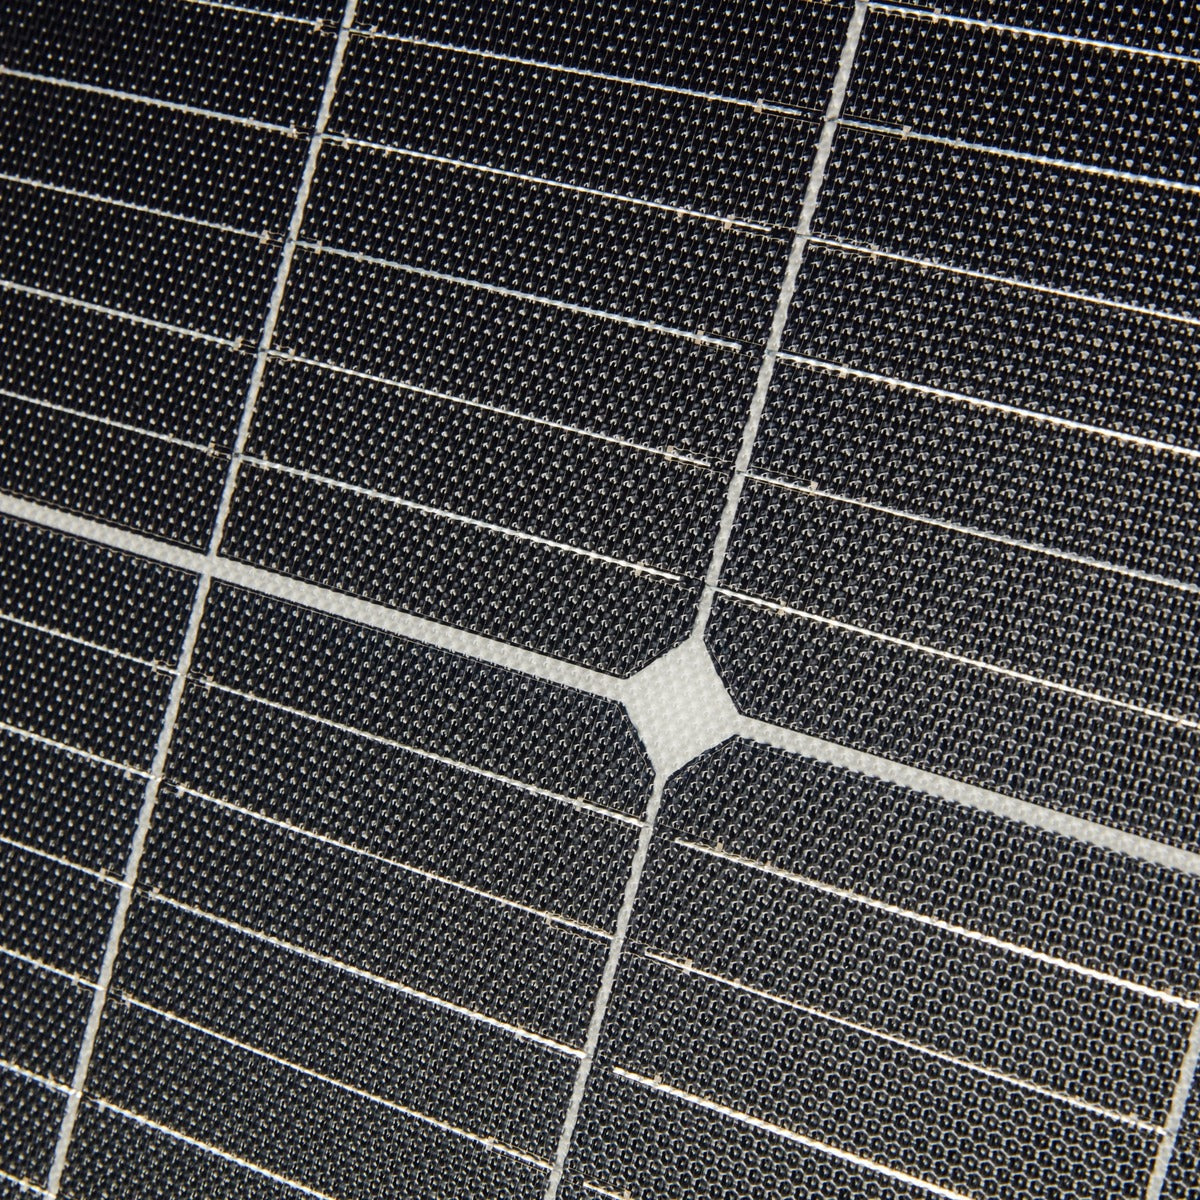 EvoCharge Sunmaster 200W Portable Solar Panel